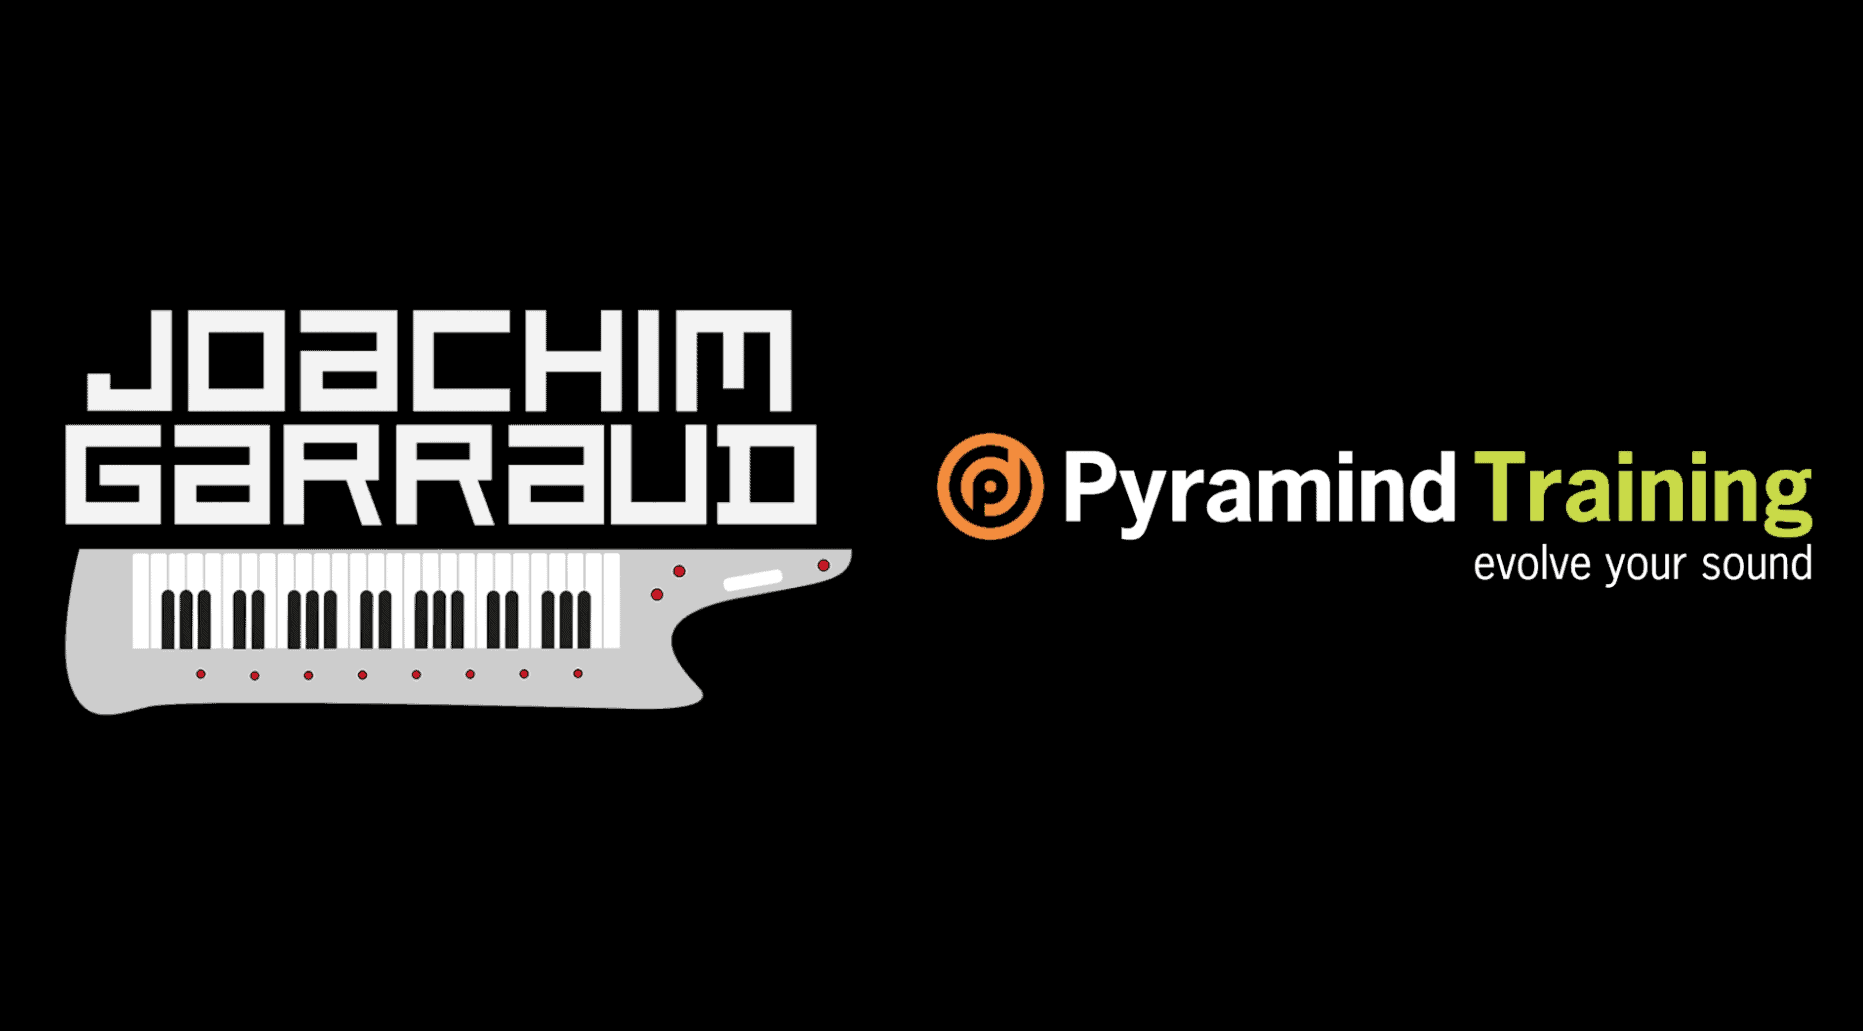 Joachim Garaud's pyramid training logo featuring black background.